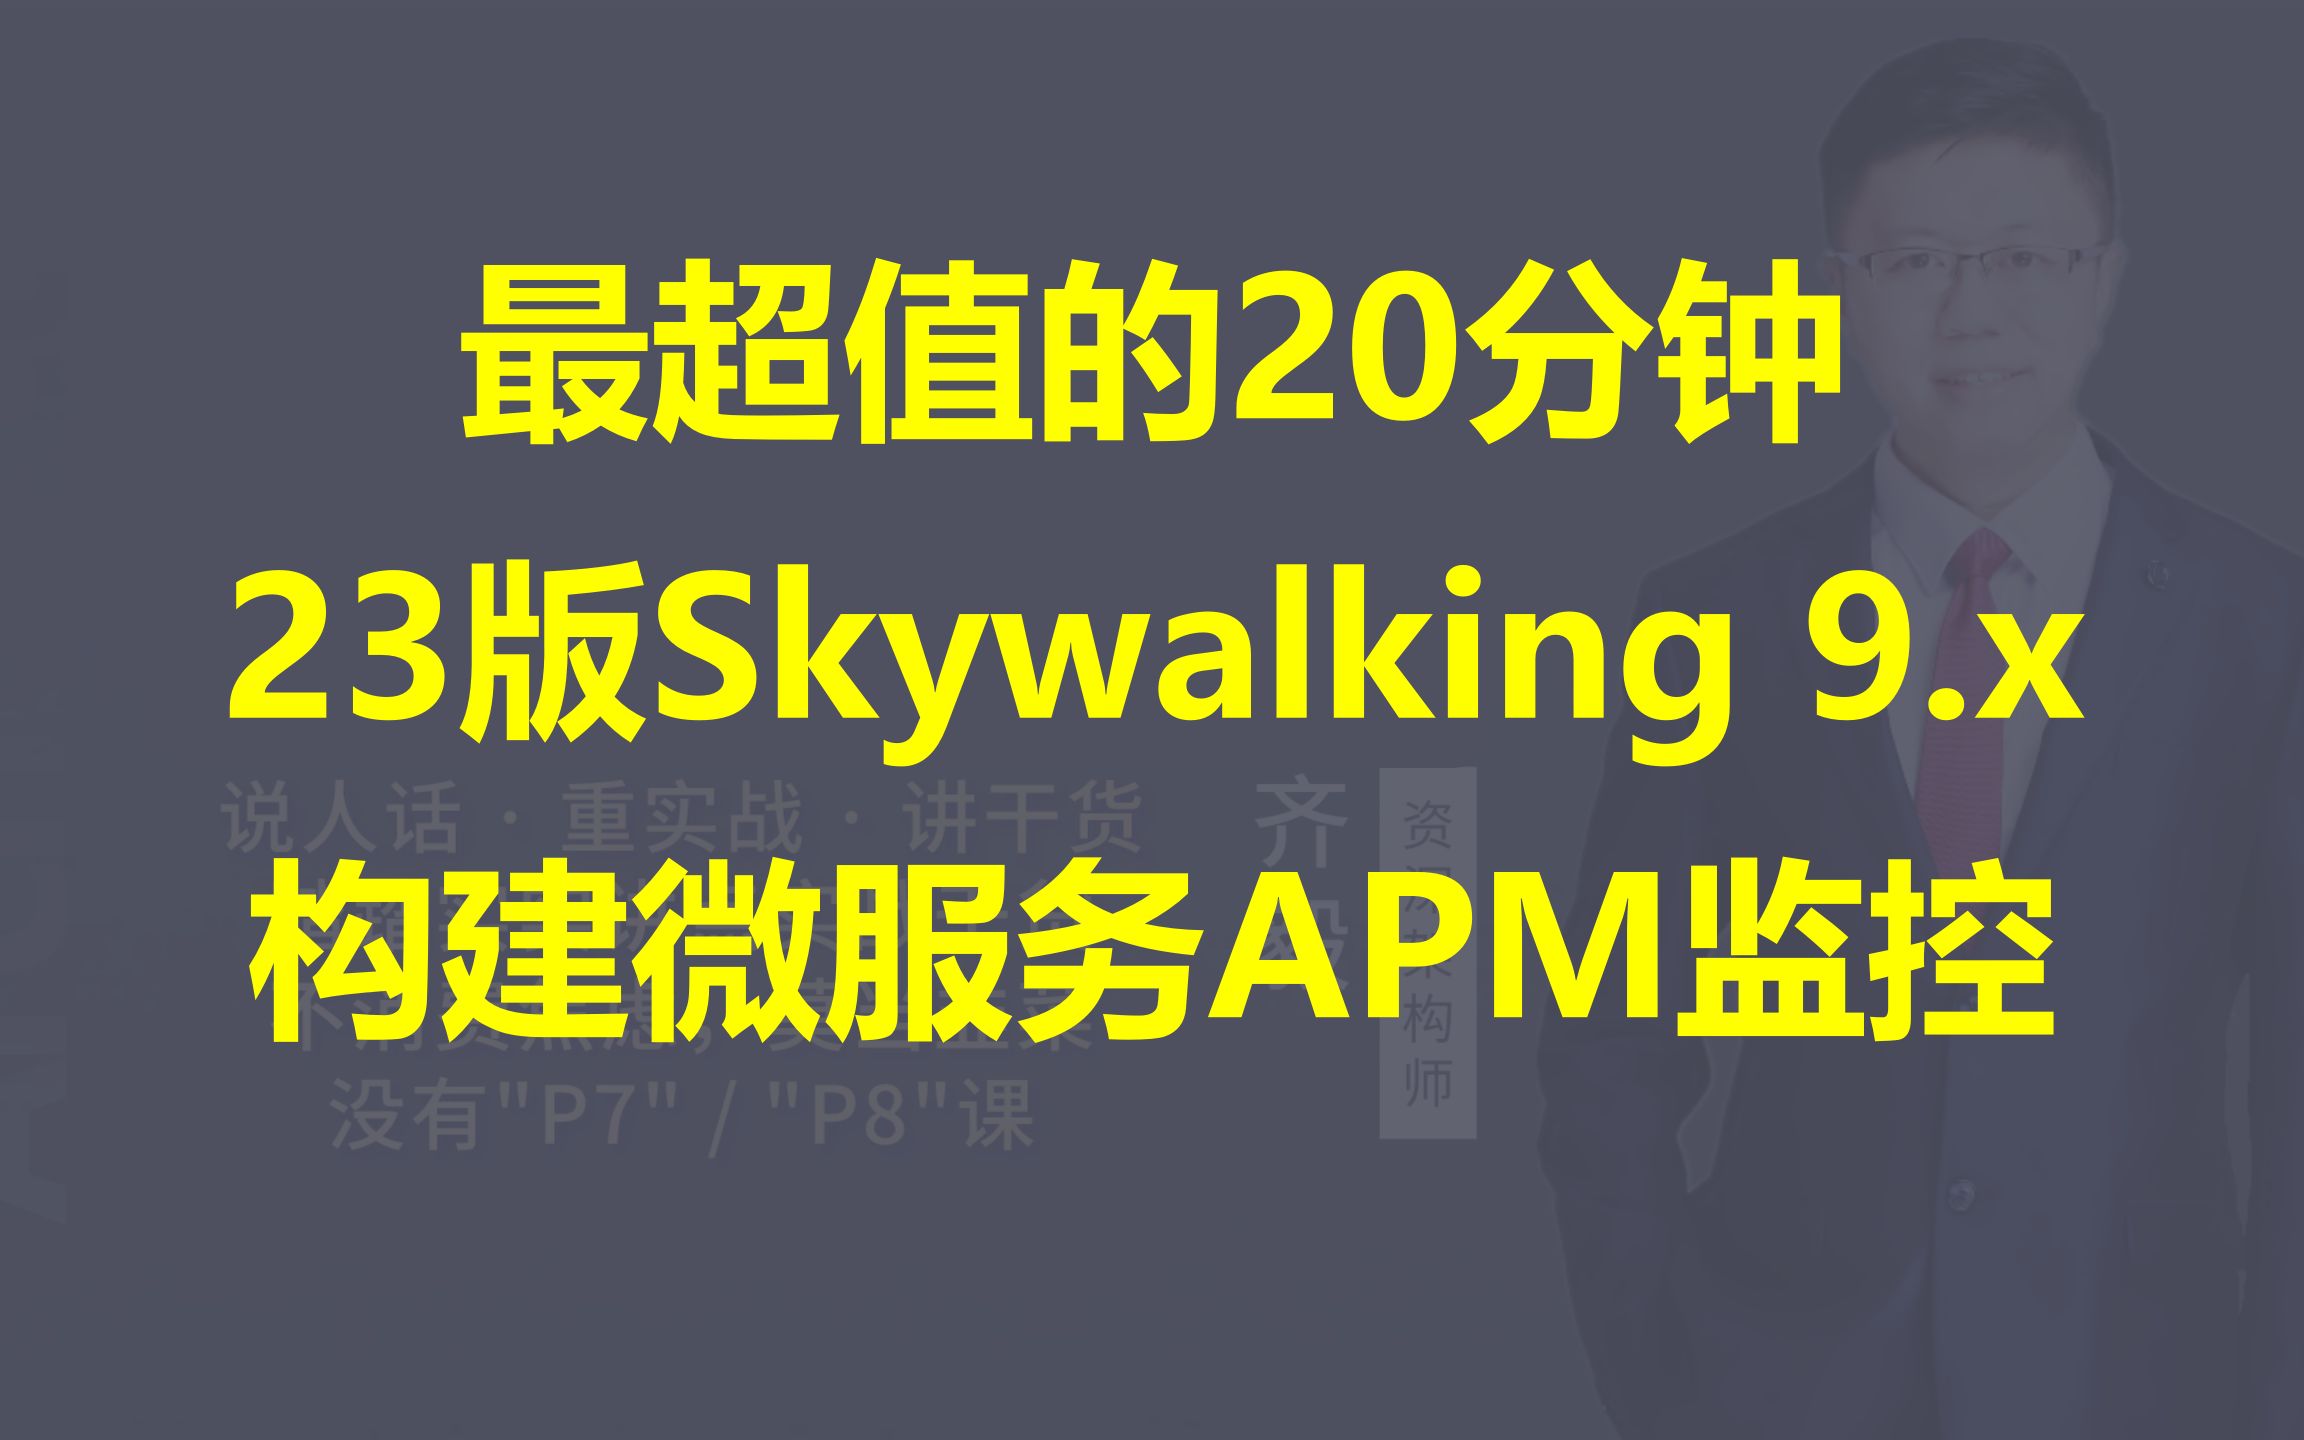 【IT老齐329】20分钟上手新版Skywalking 9.x APM监控系统